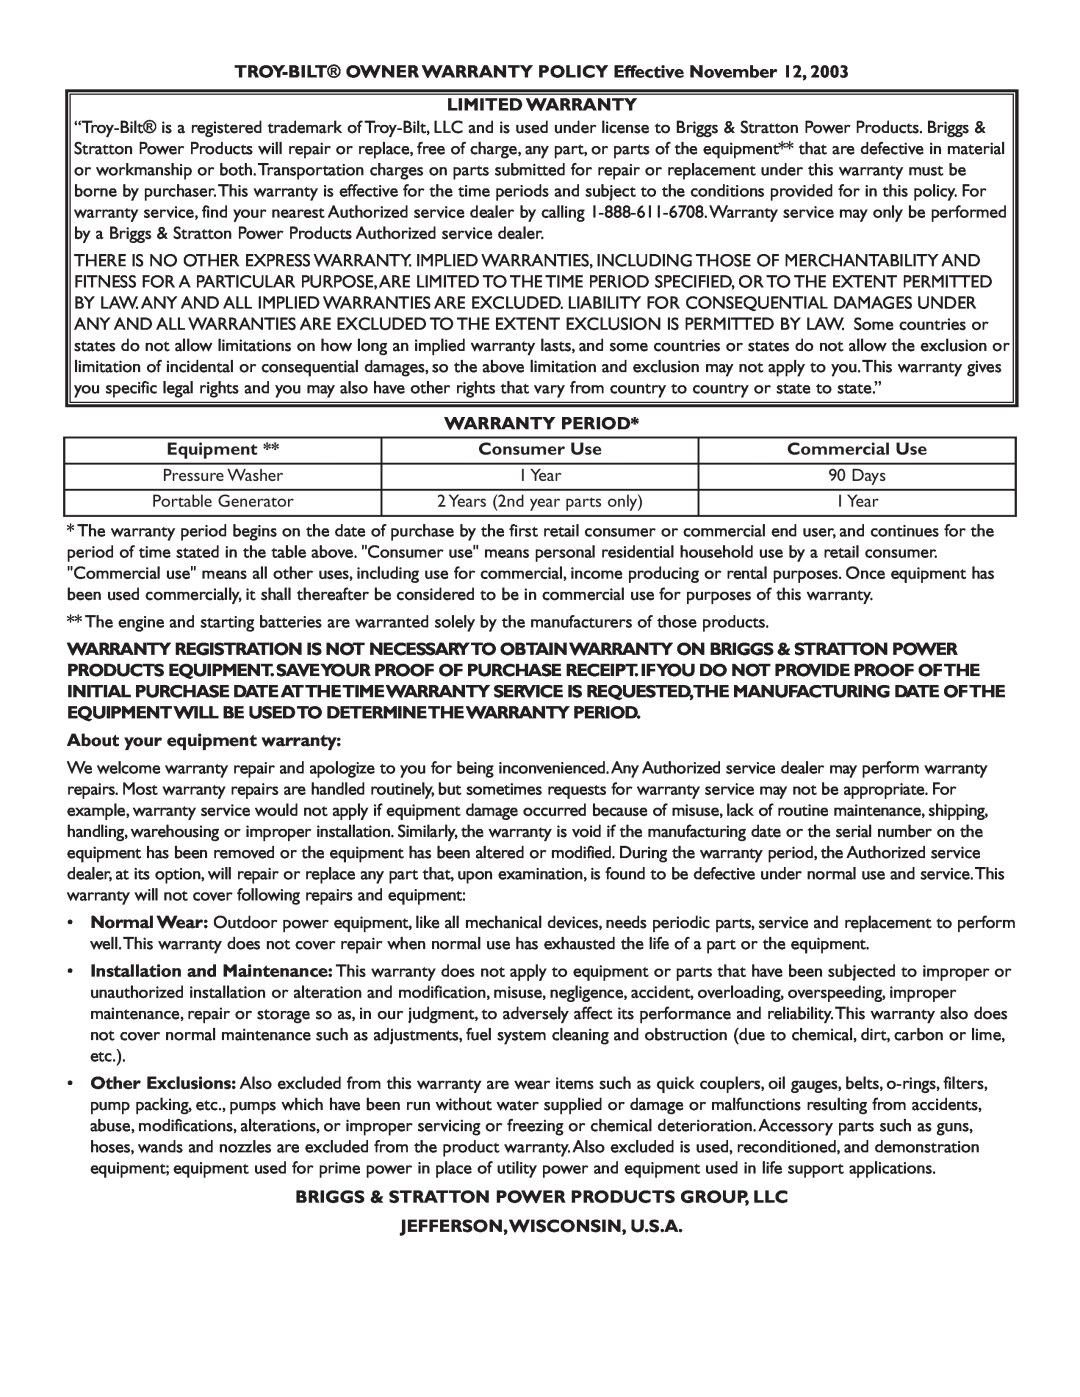 Troy-Bilt 20207 manual TROY-BILT OWNER WARRANTY POLICY Effective November, Limited Warranty, Warranty Period, Equipment 